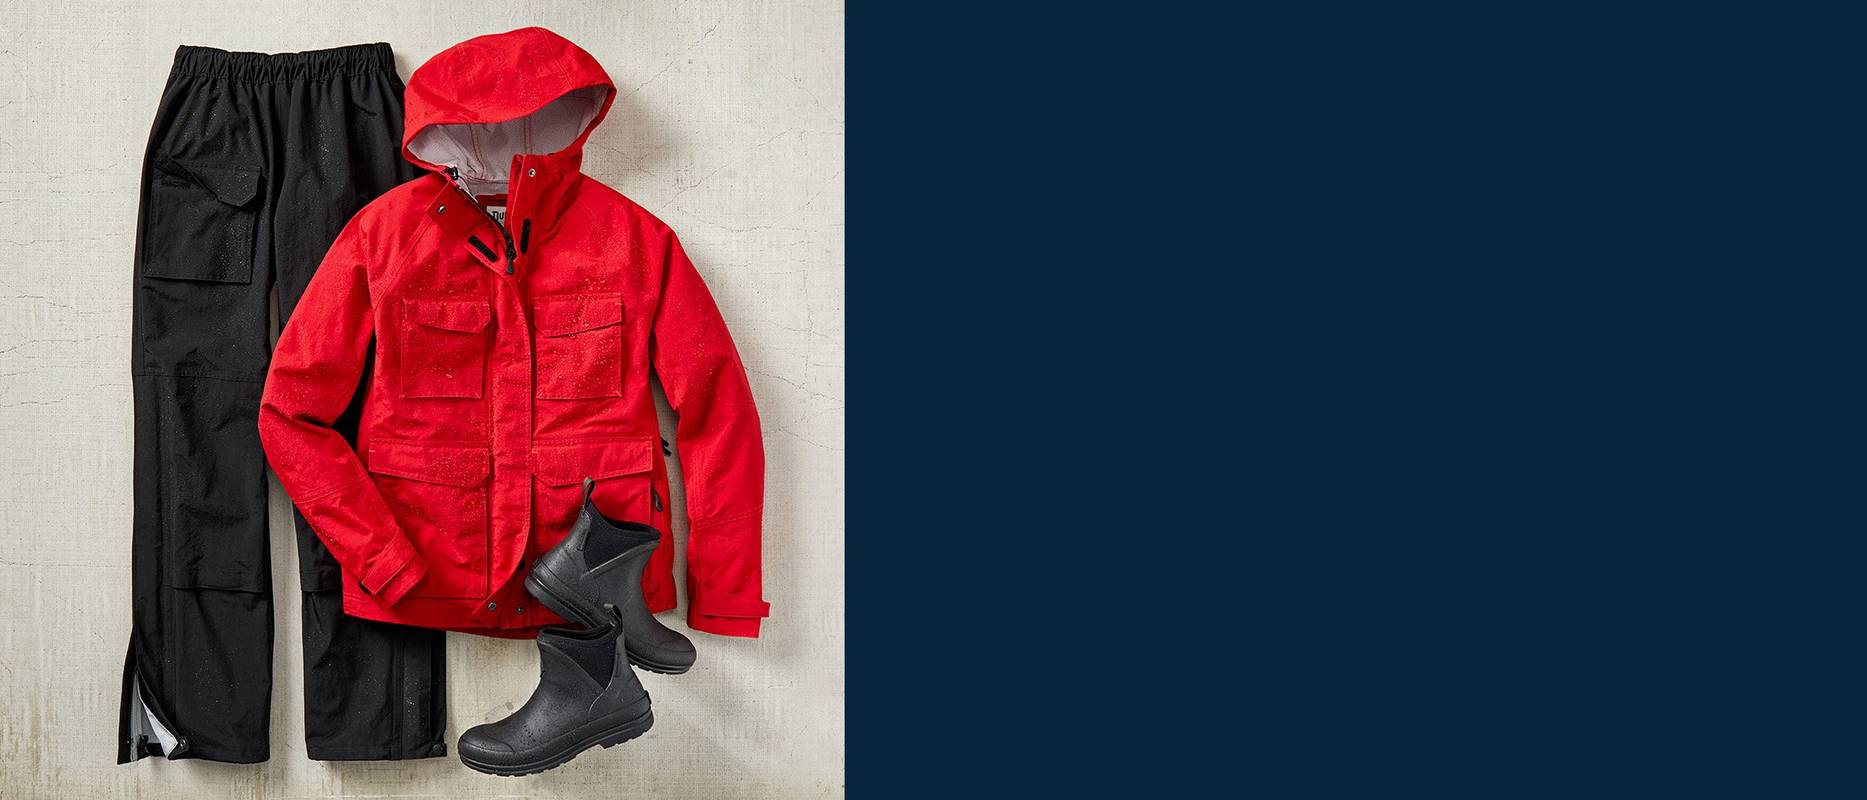 A pair of black rain pants, red raincoat and black rain boots